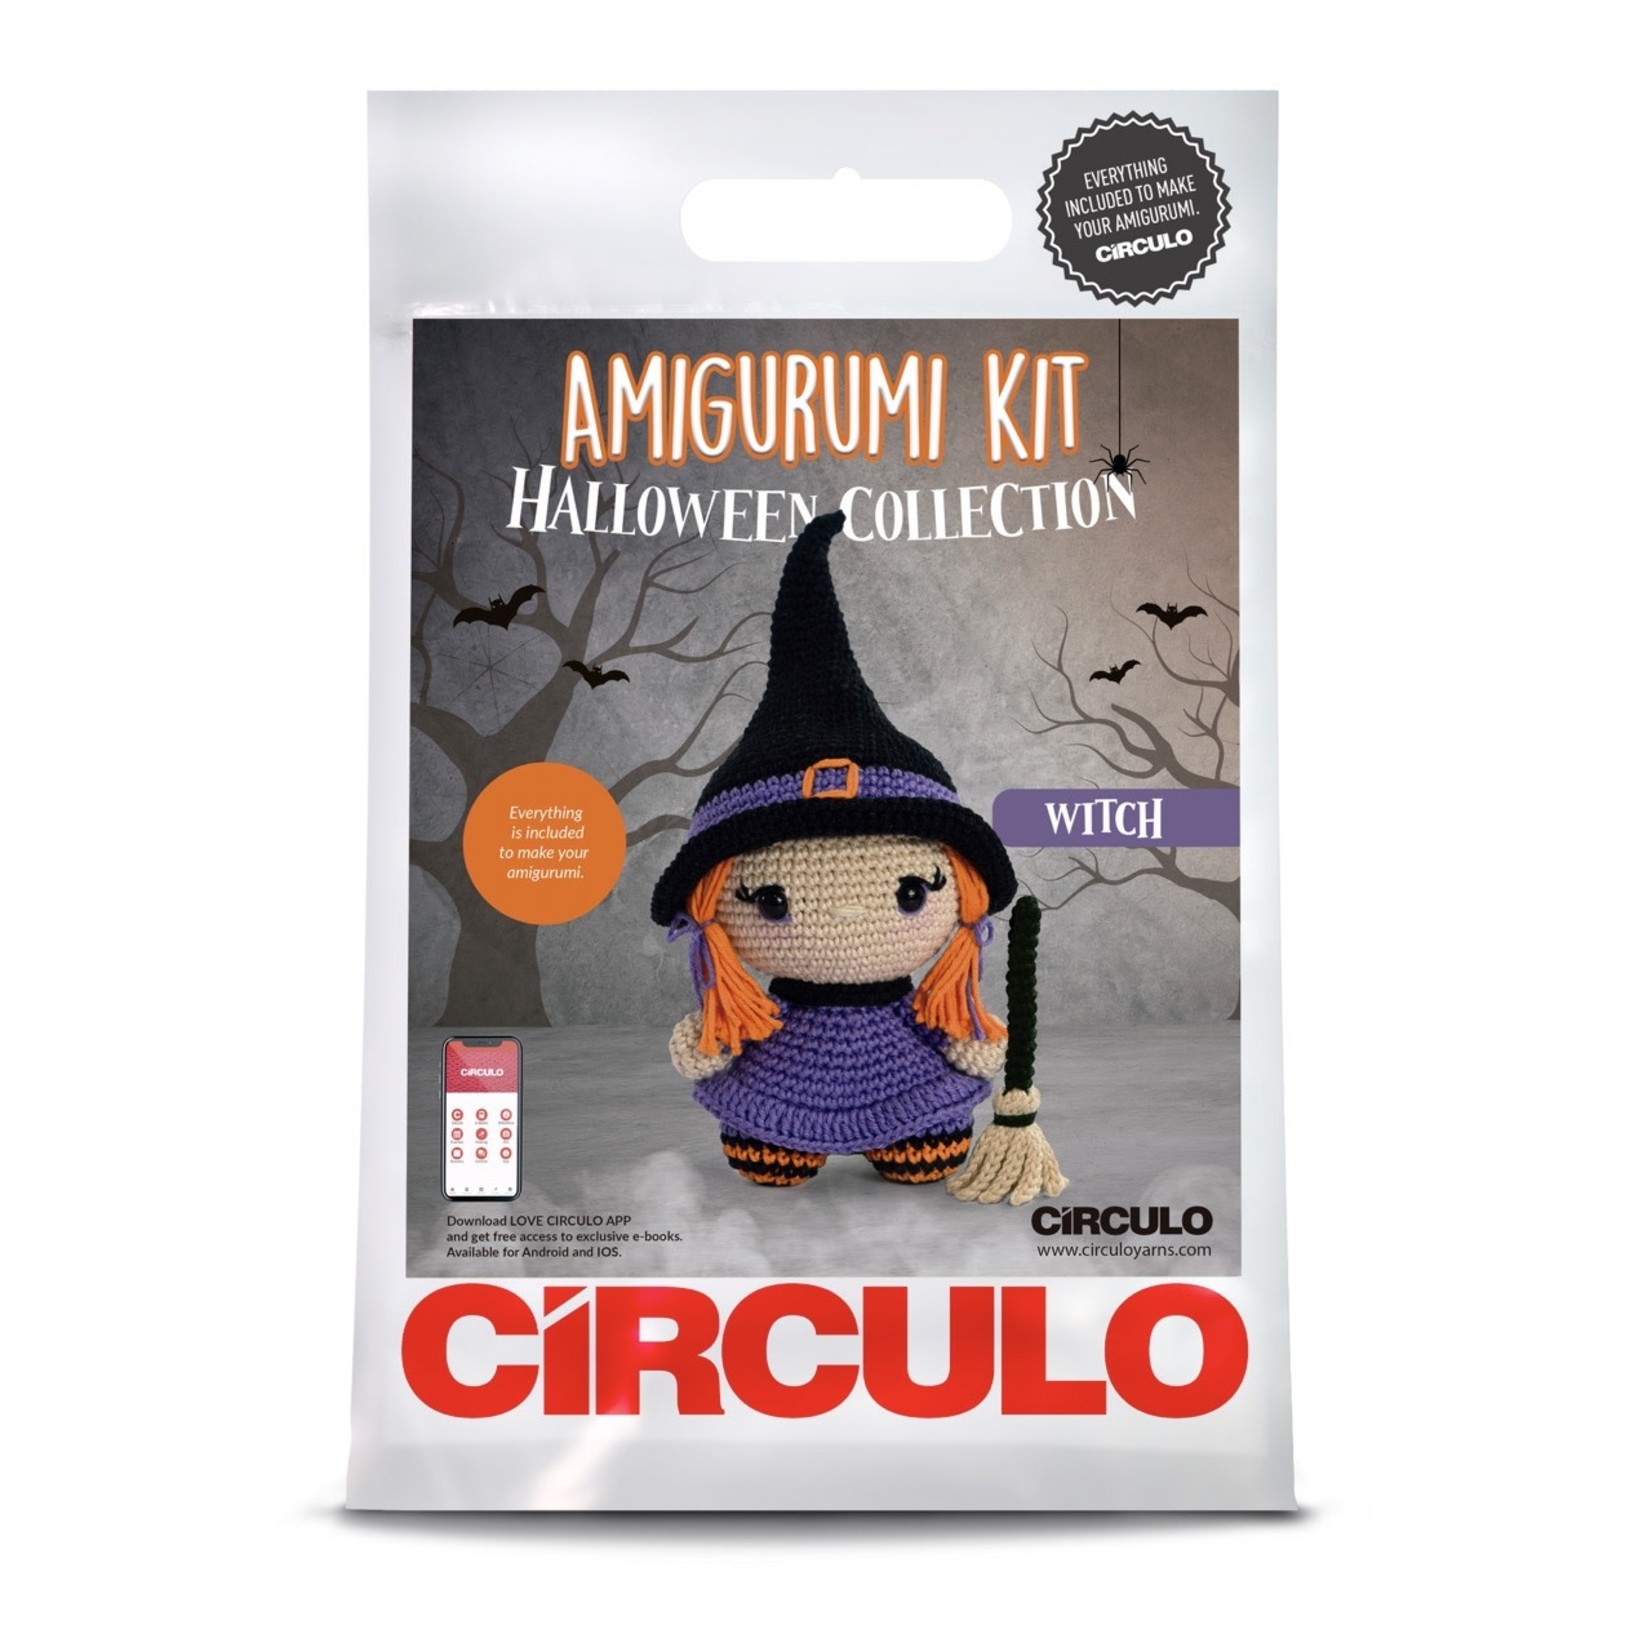 Circulo Amigurumi Kit Witch